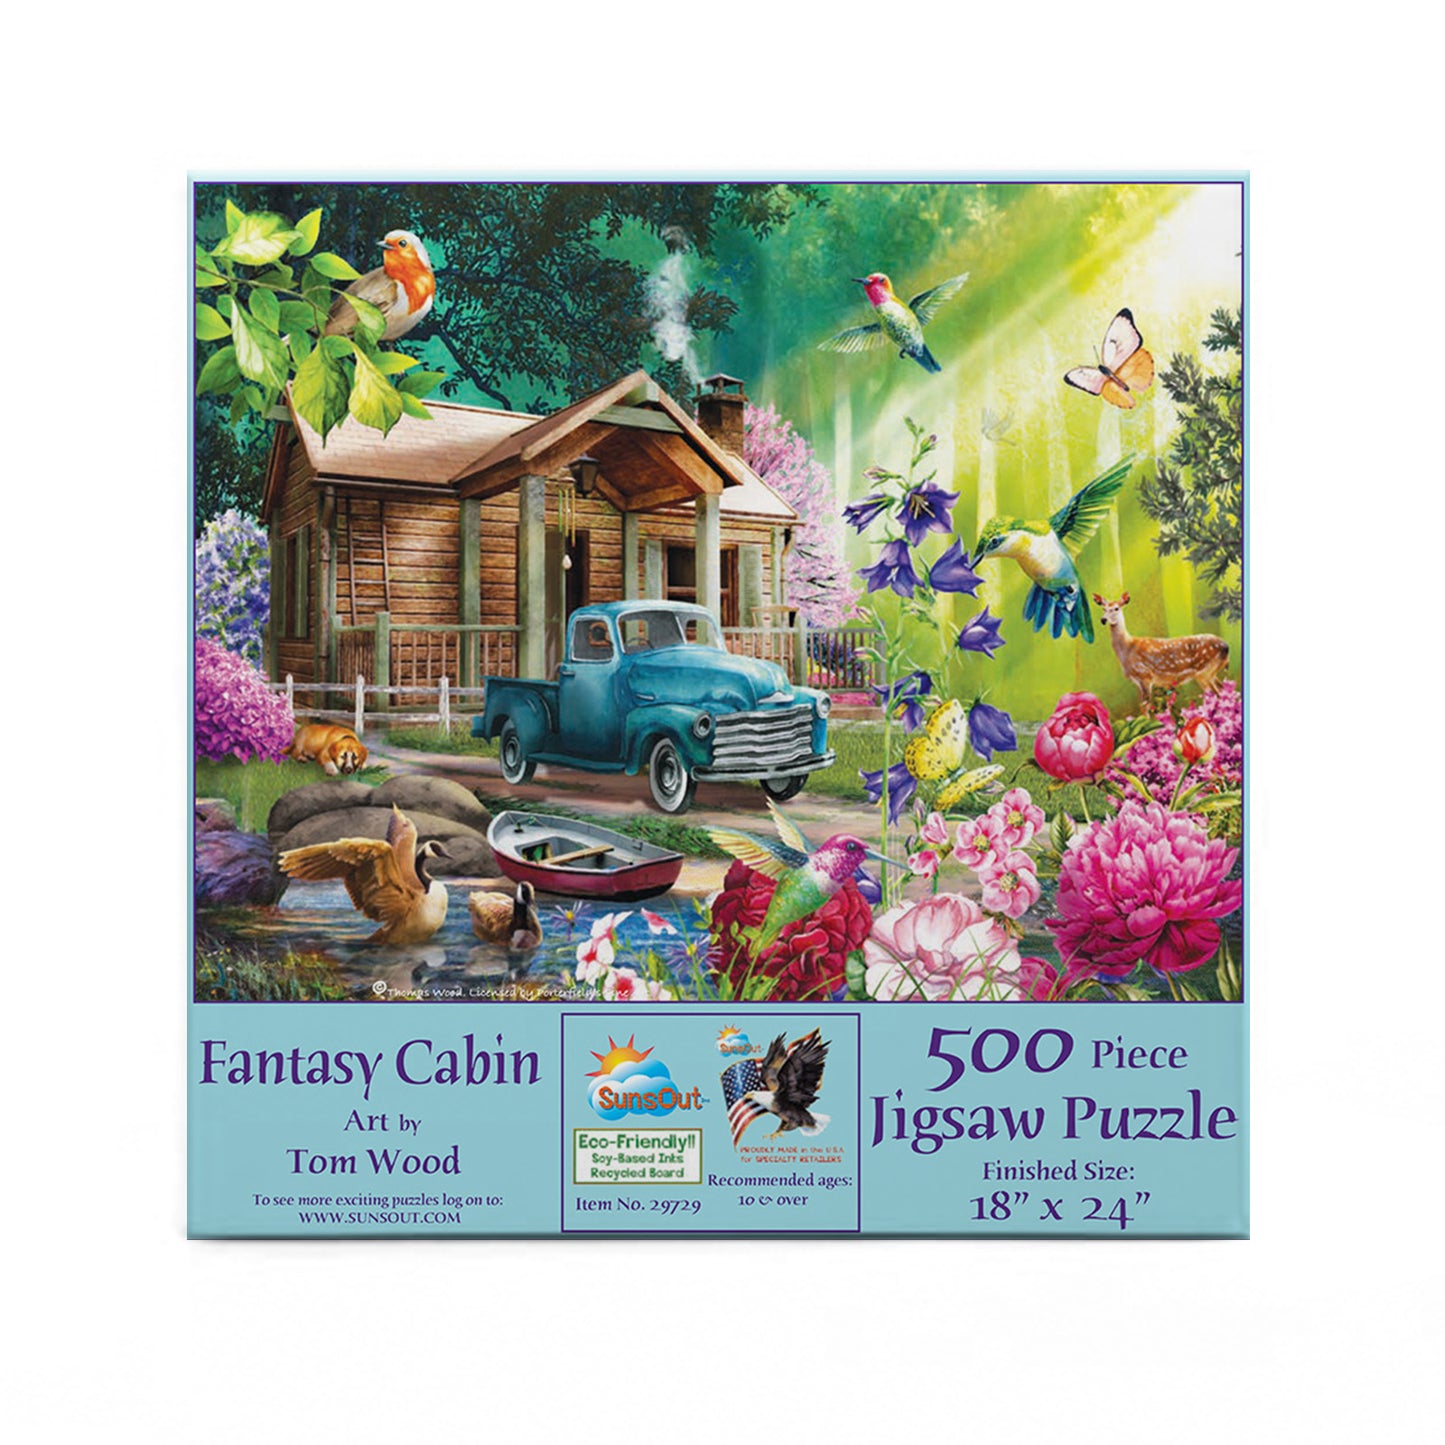 Fantasy Cabin - 500 Piece Jigsaw Puzzle